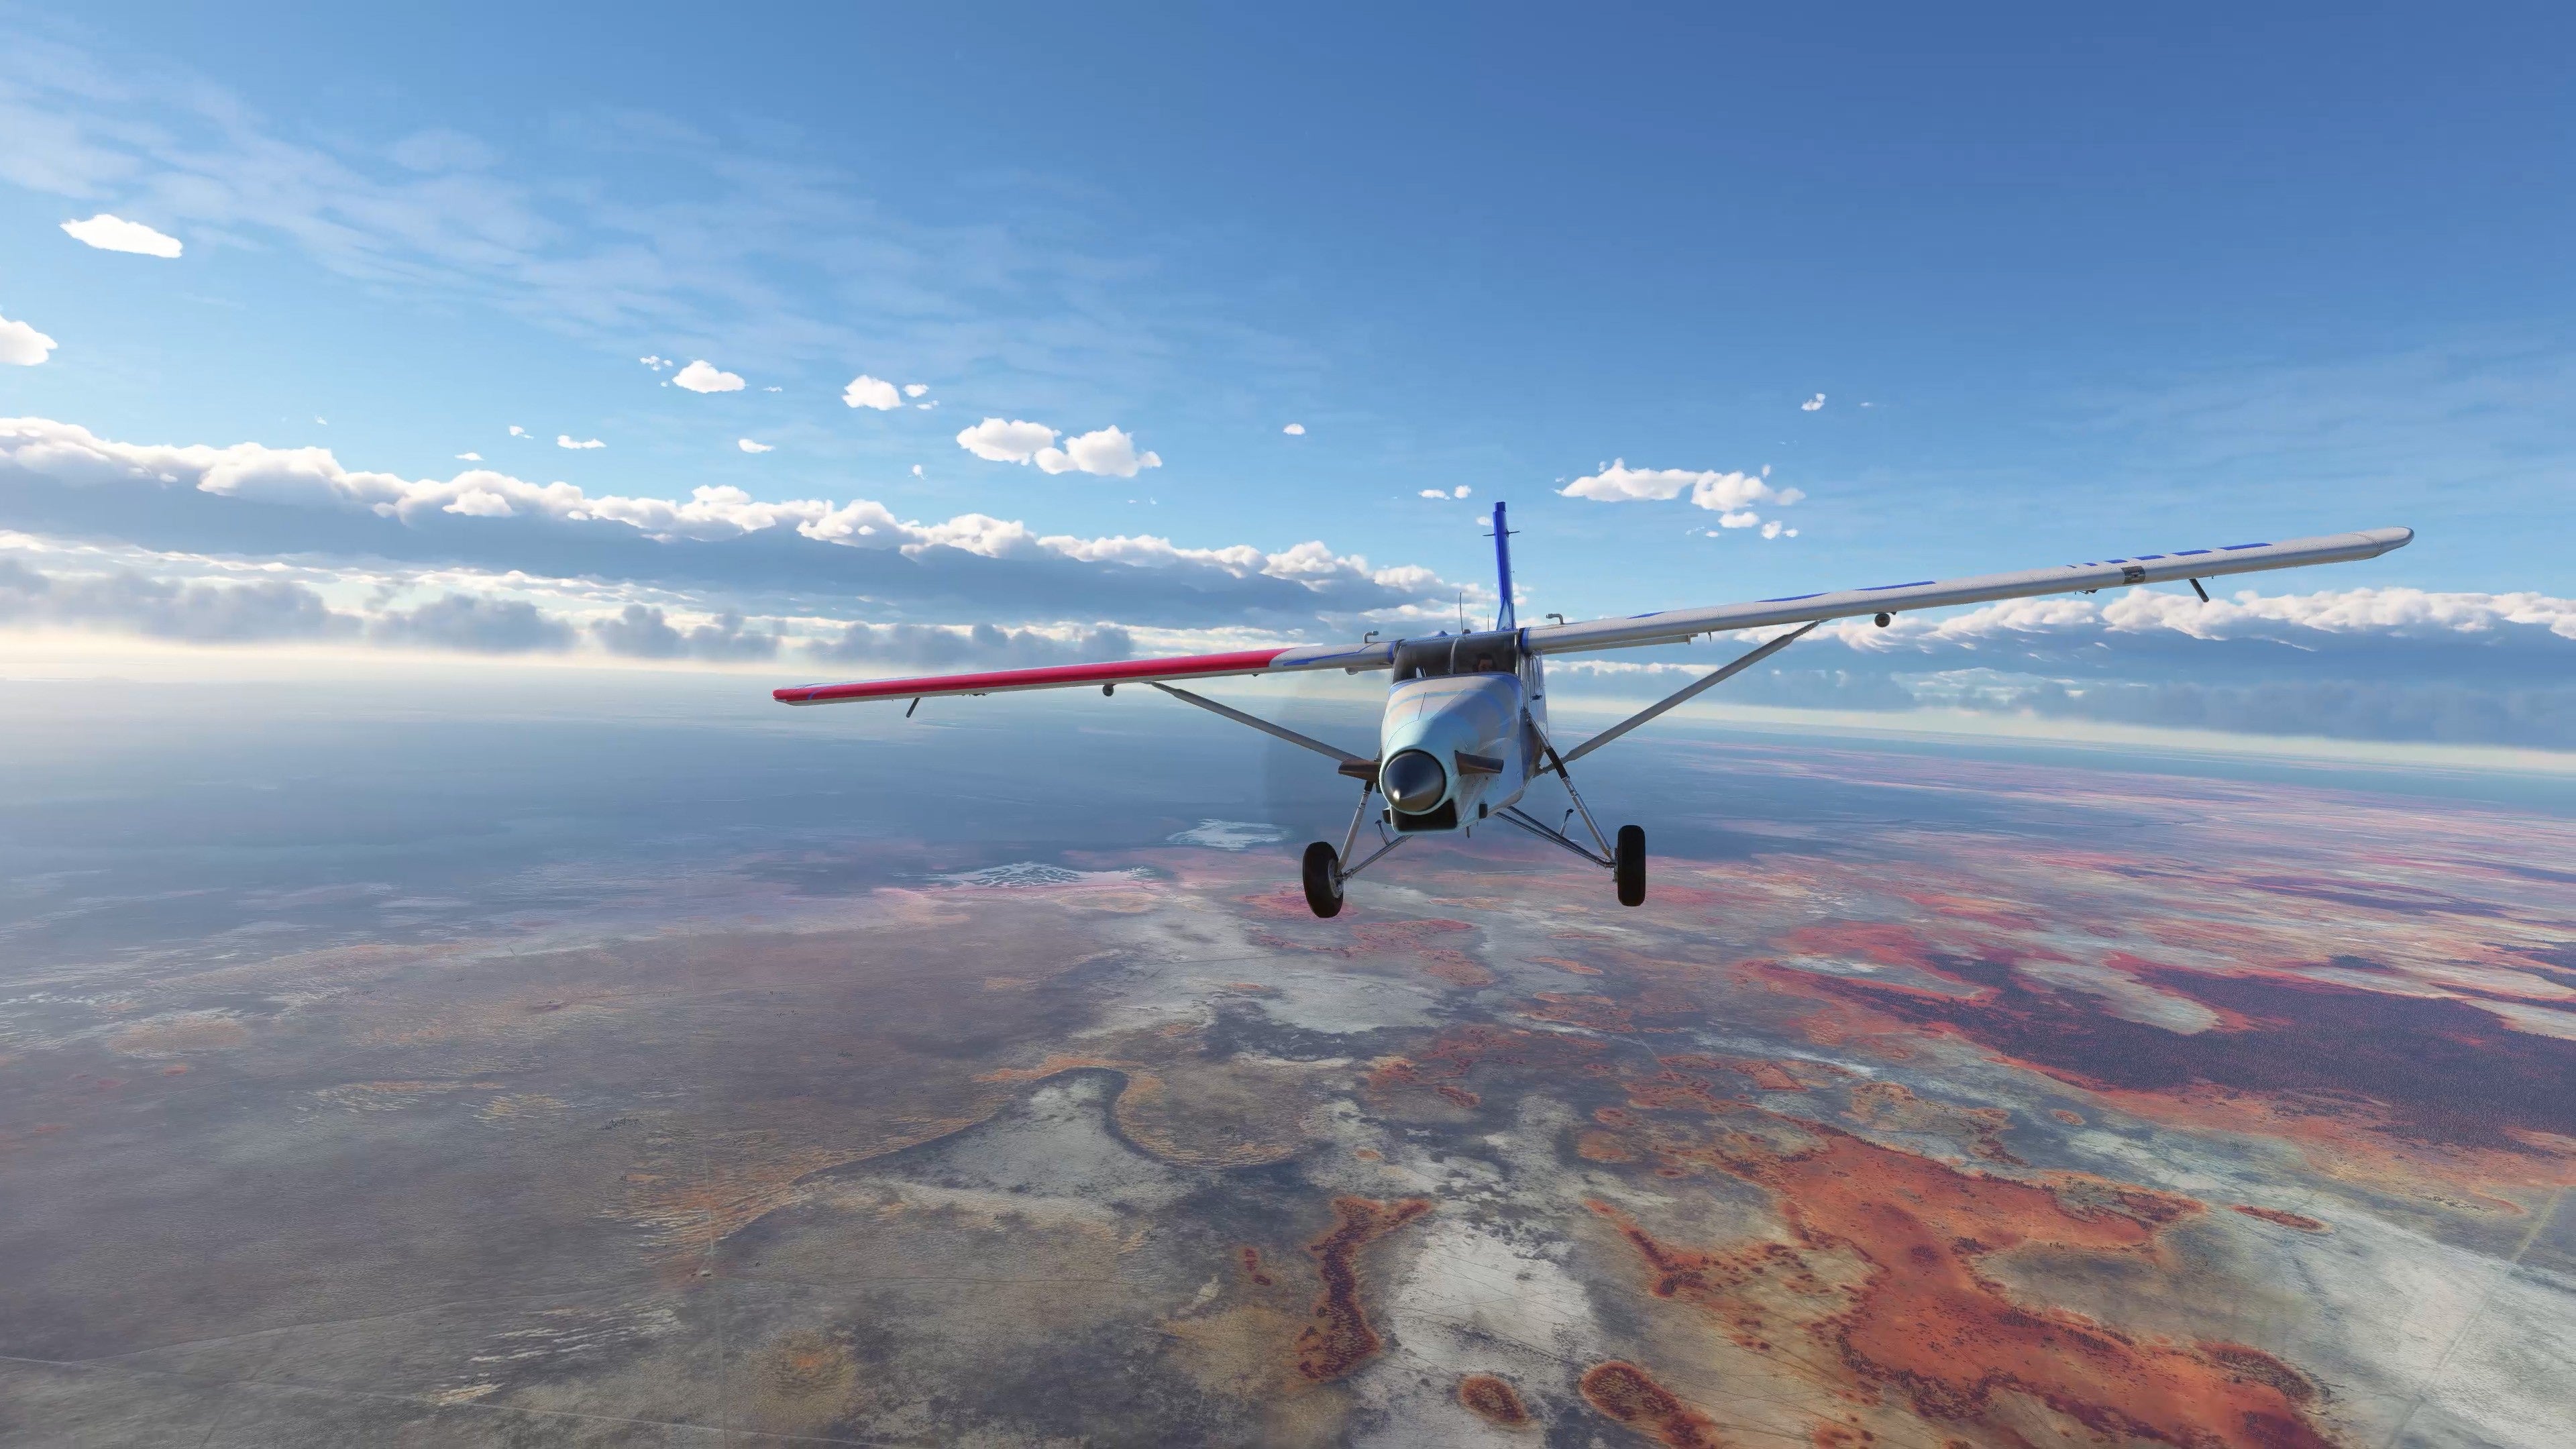 Image for Microsoft Flight Simulator's latest world update focuses on Australia